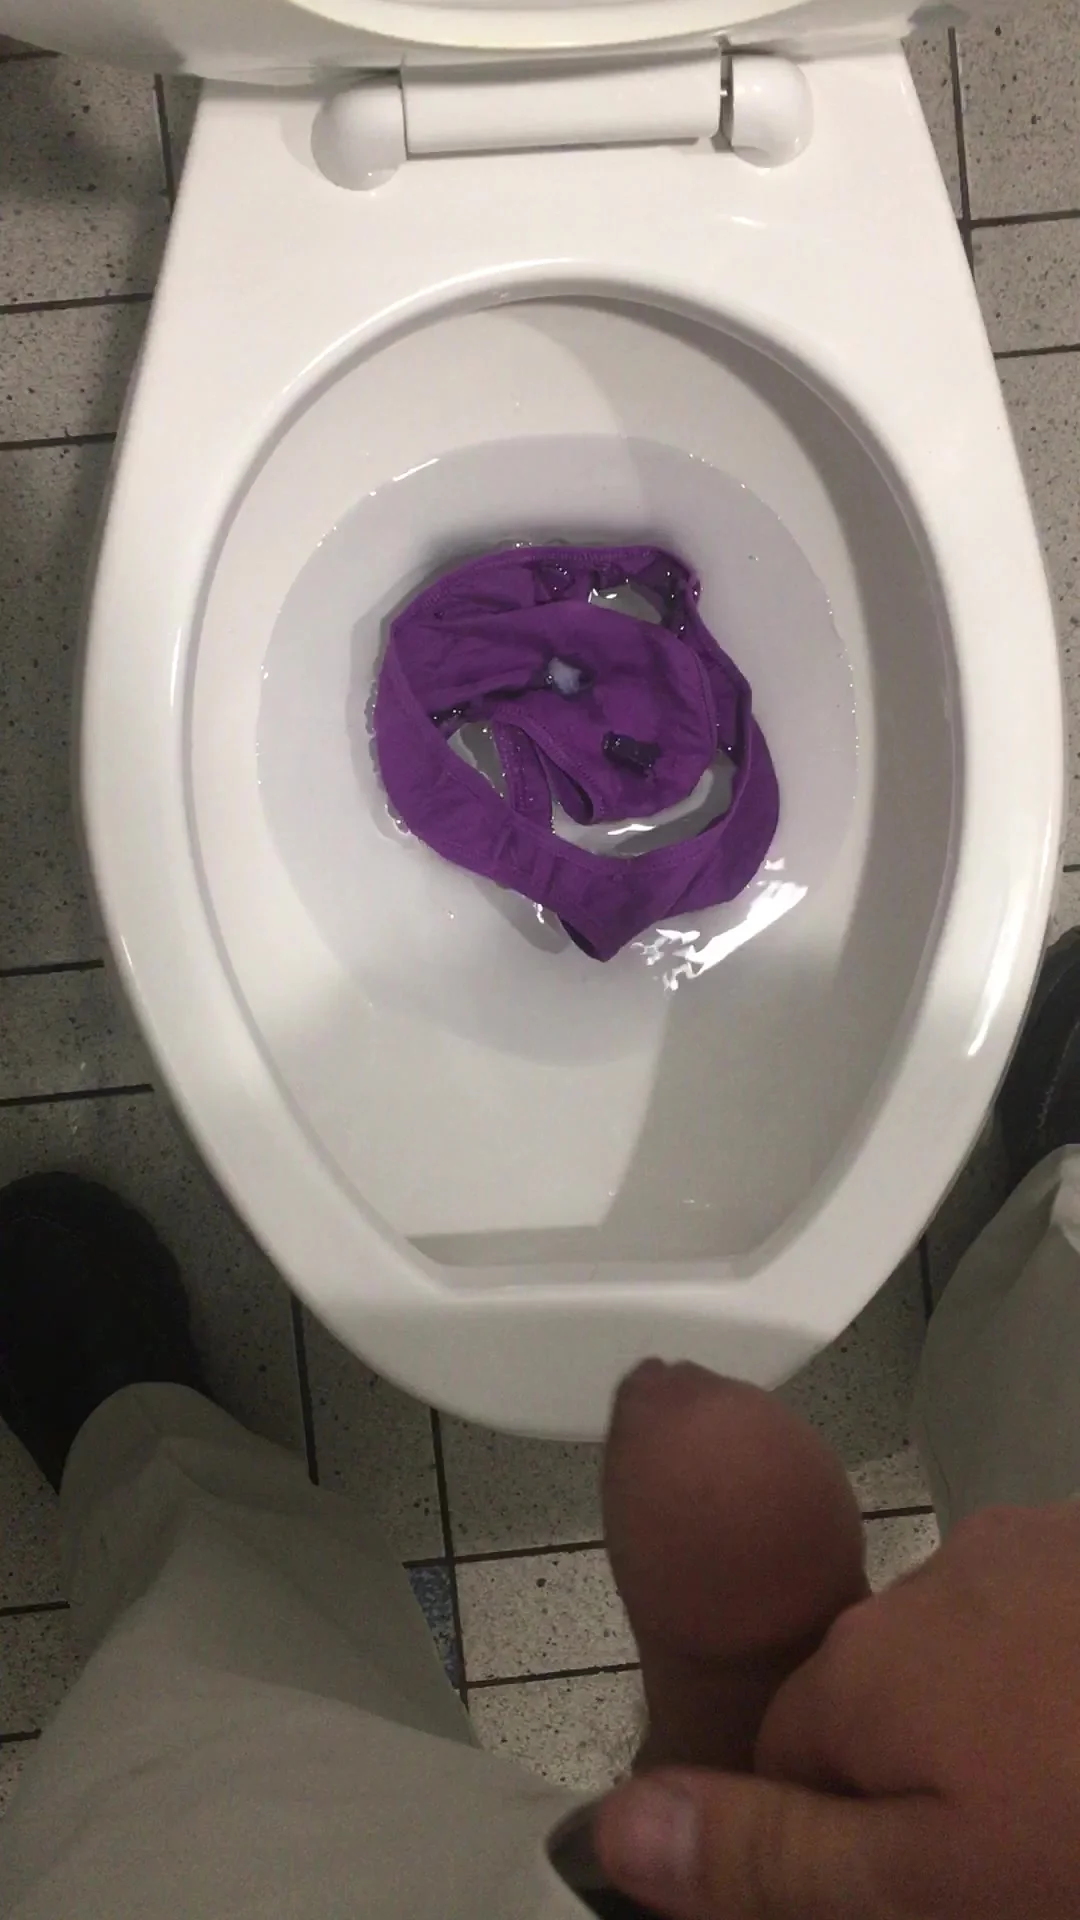 Toilet Flush - Cumming in panties then flushing them down the toilet - ThisVid.com